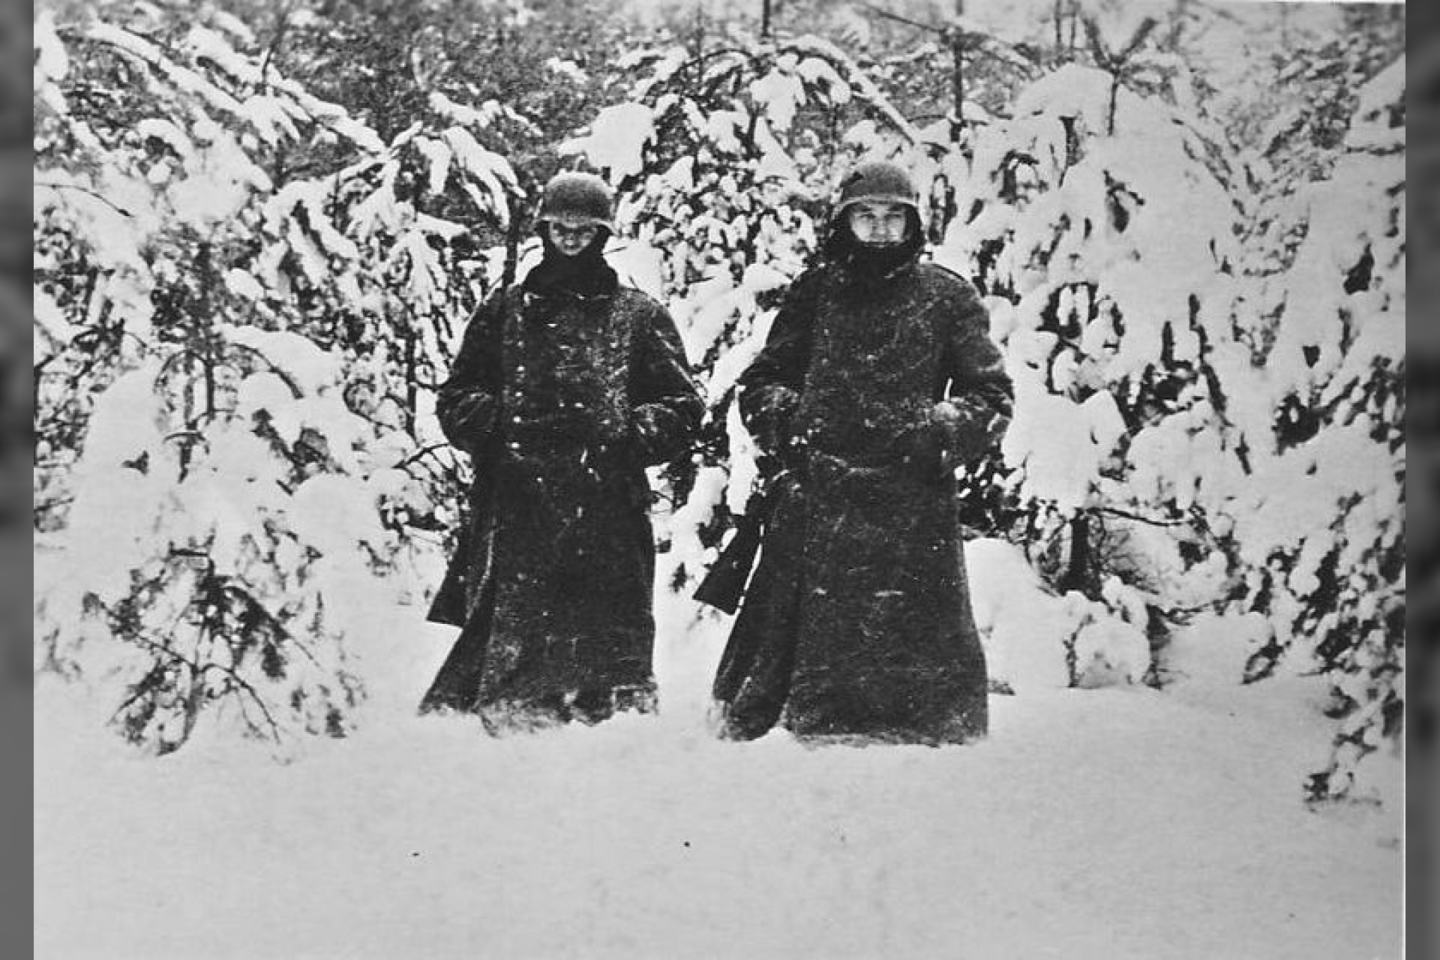  Vokiečiai, stovintys sniege, netoli Maskvos.<br> Wikimedia Commons.